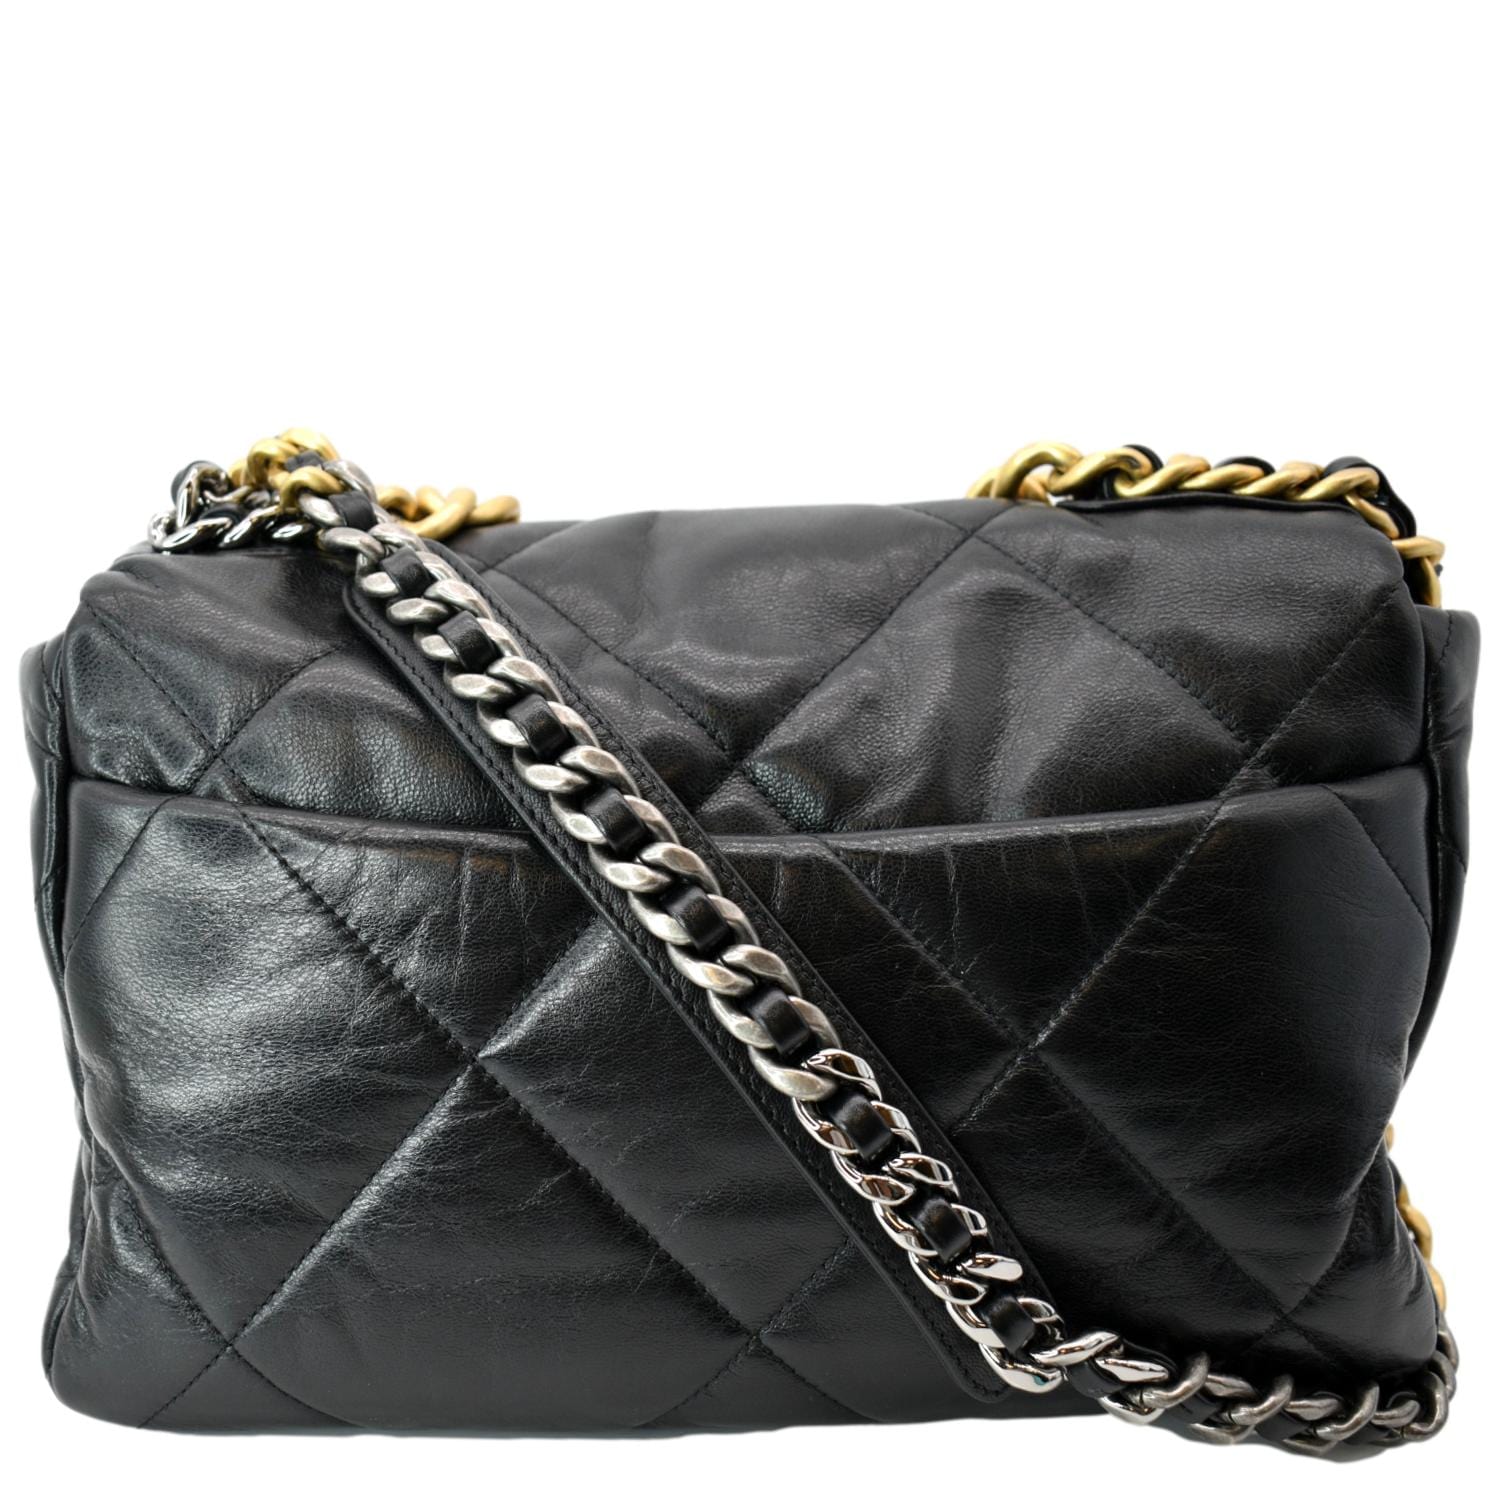 chanel handbags online store